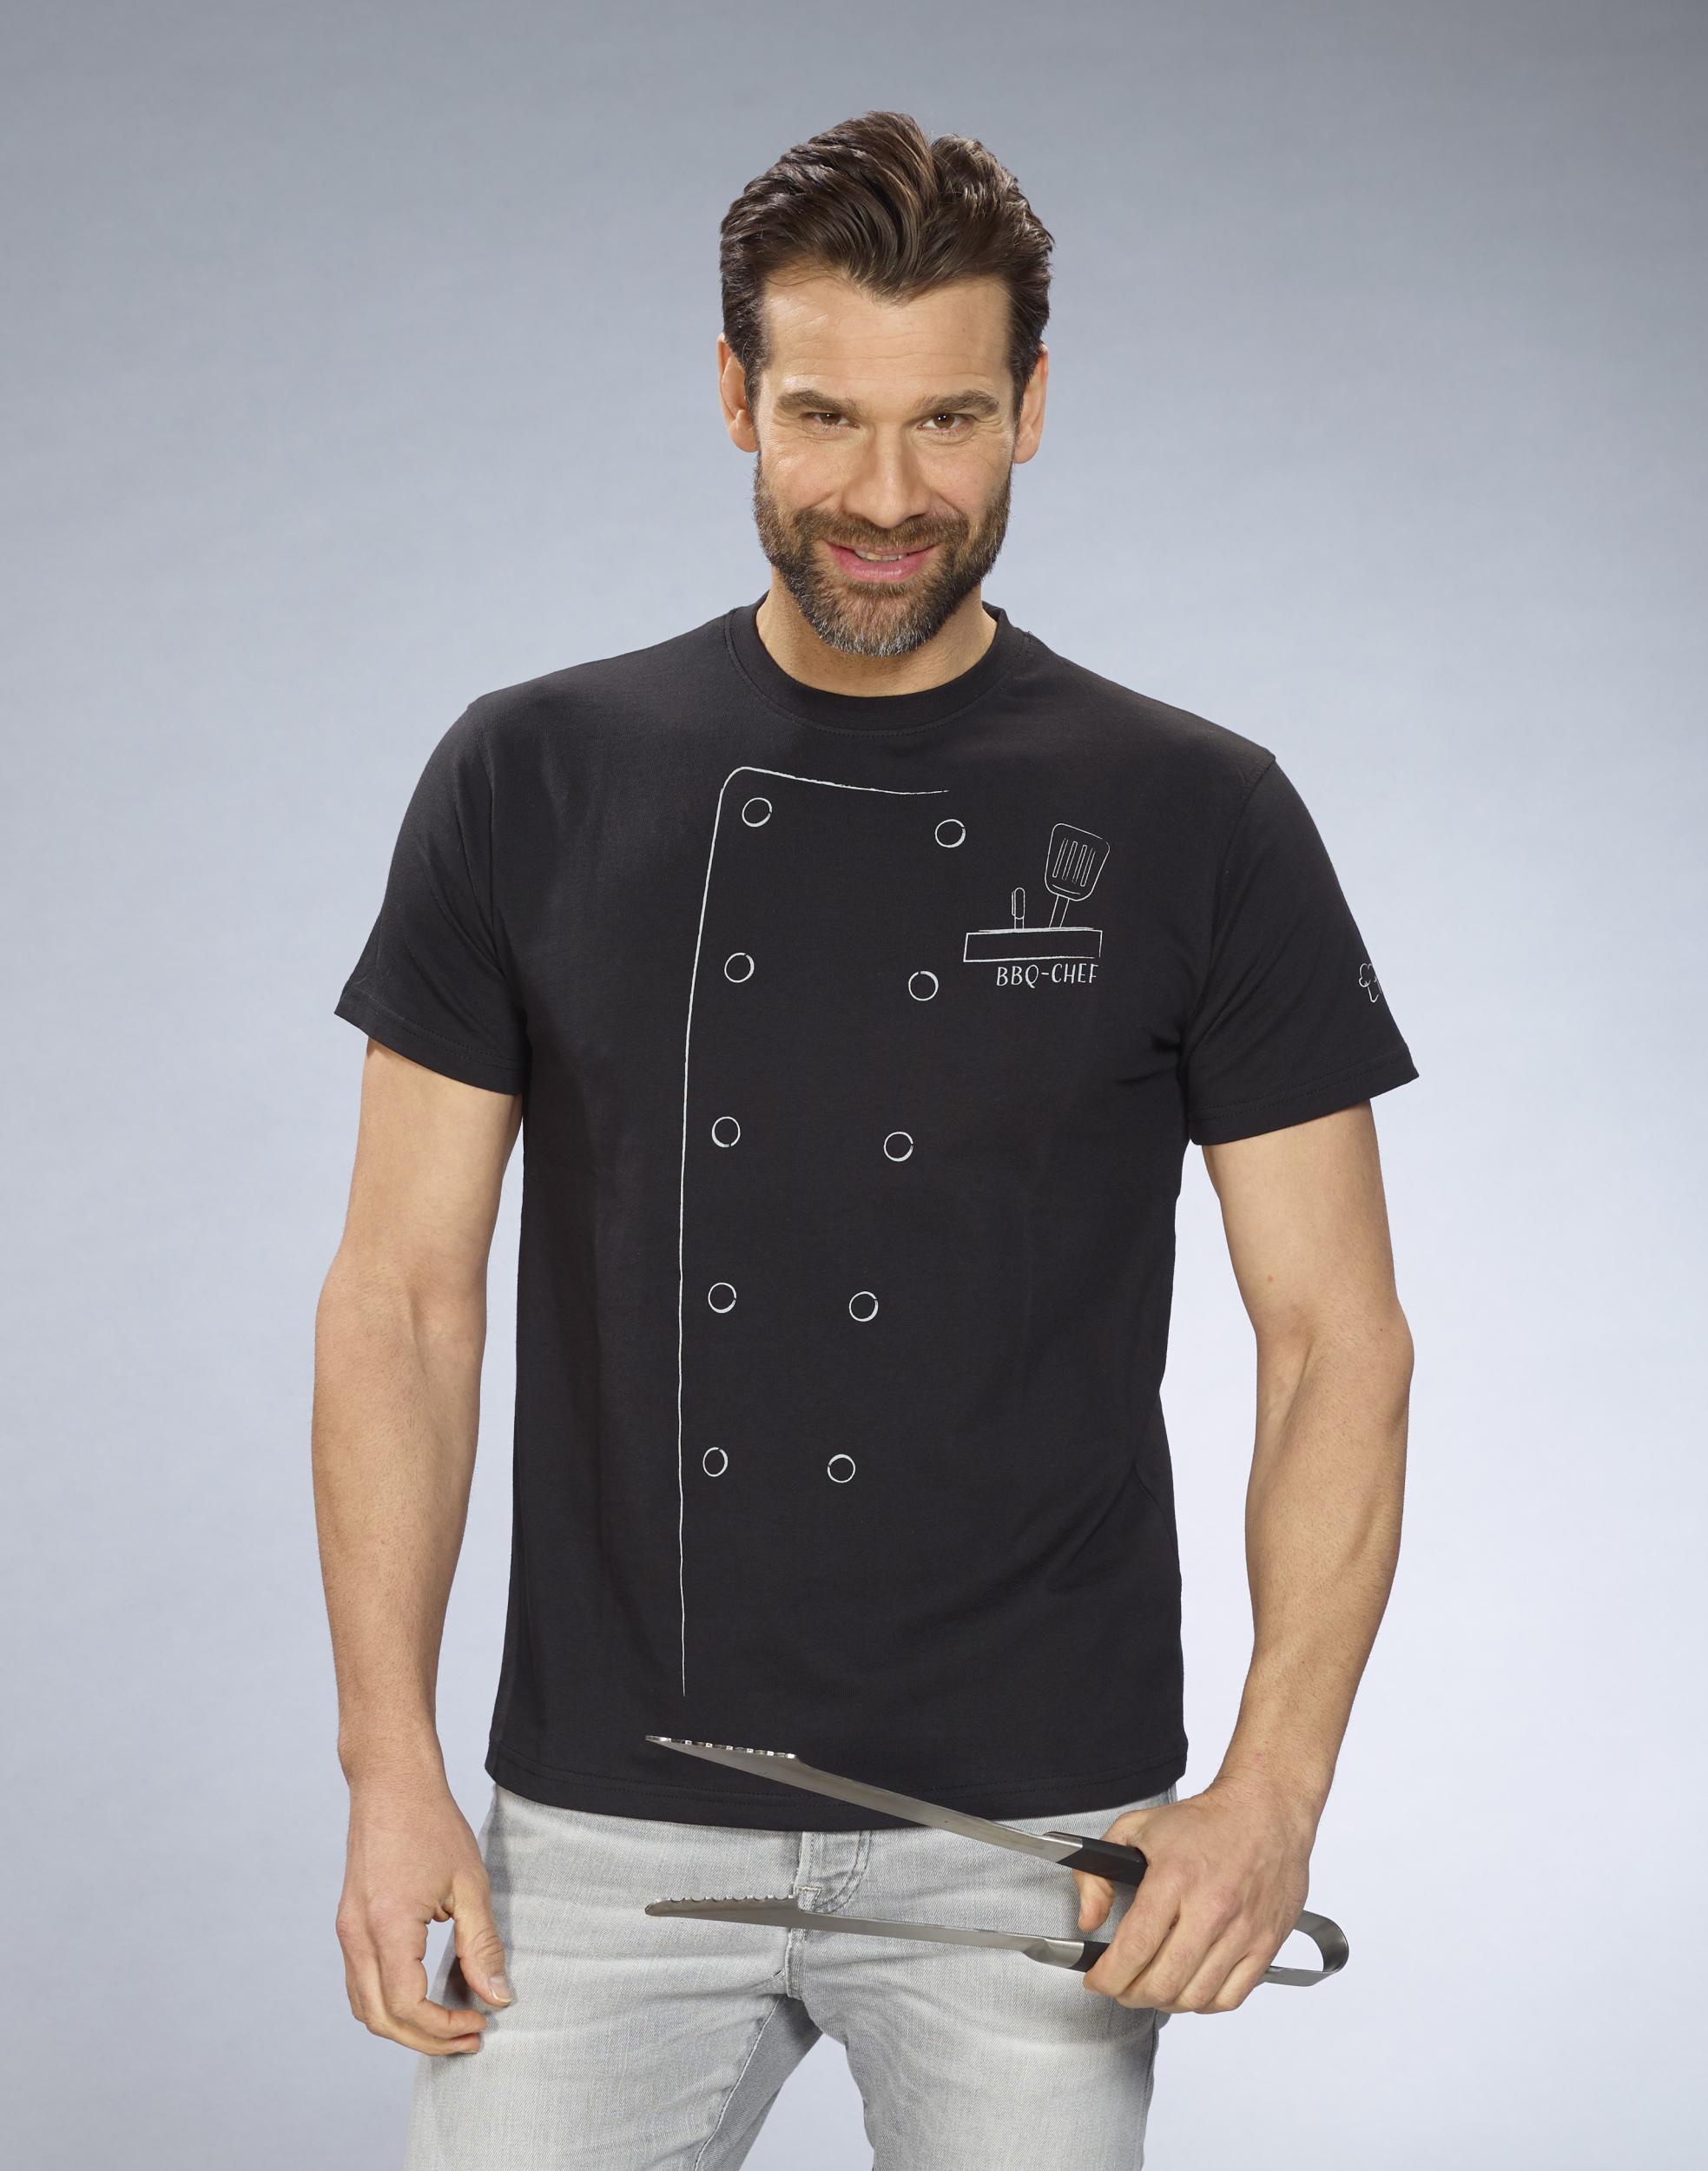 T-Shirt Grillmeister, Farbe schwarz, Gr.XL